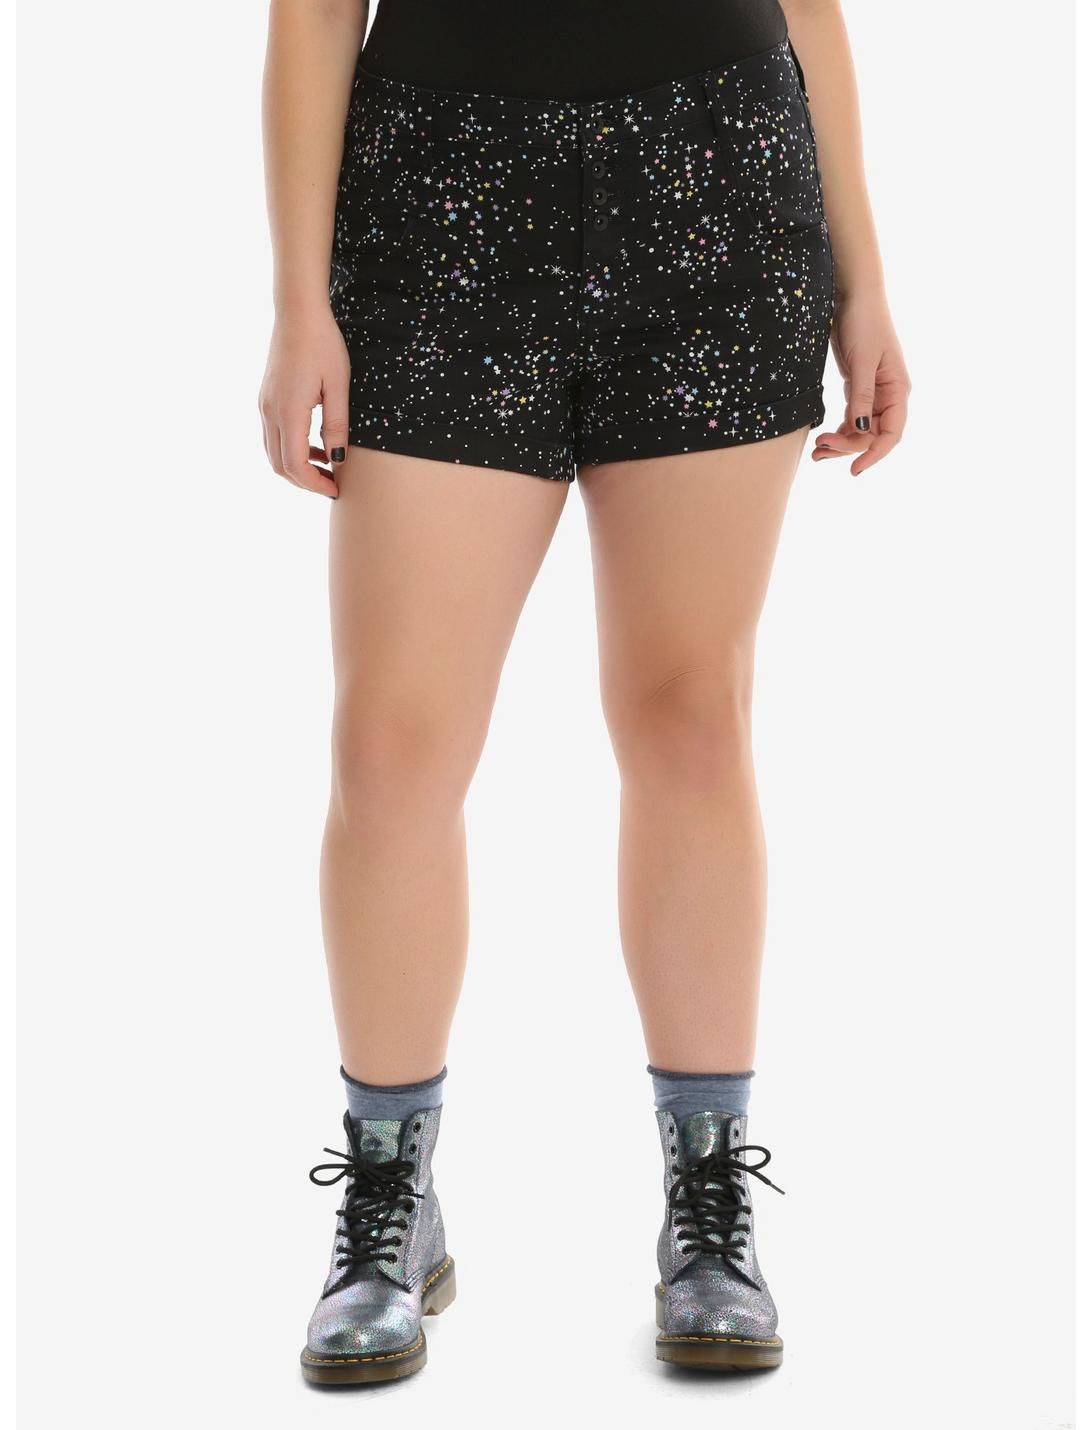 Blackheart Pastel Stars V-Stitch Shorts Plus Size, BLACK, hi-res